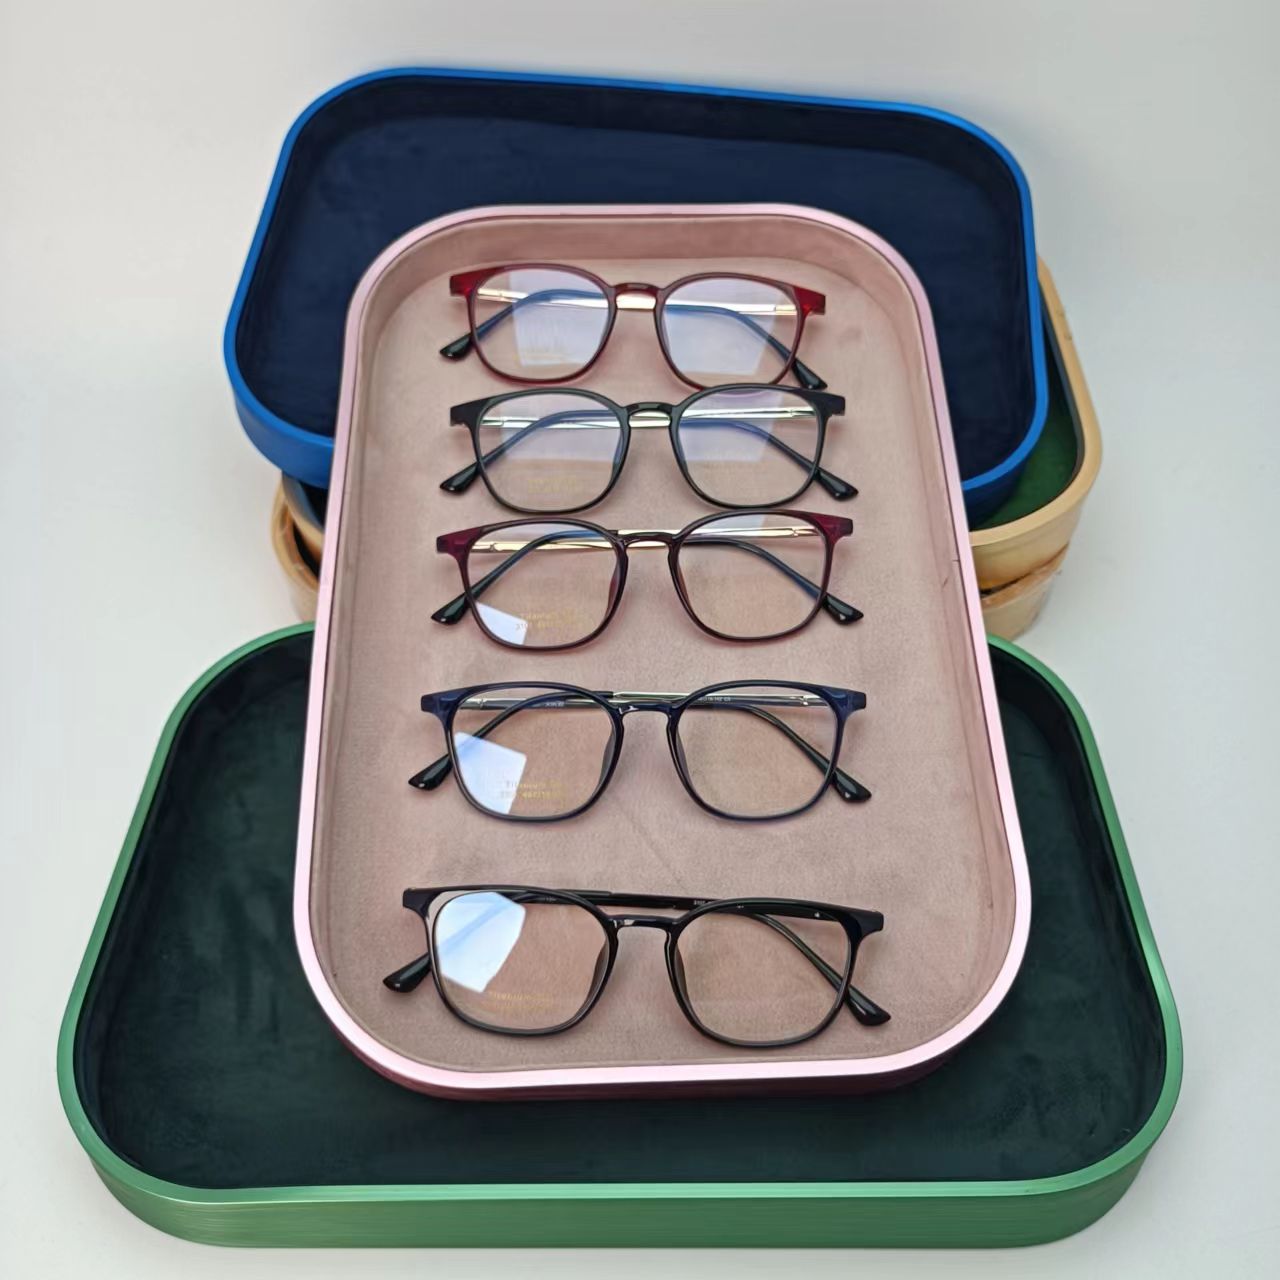 Glasses display tray